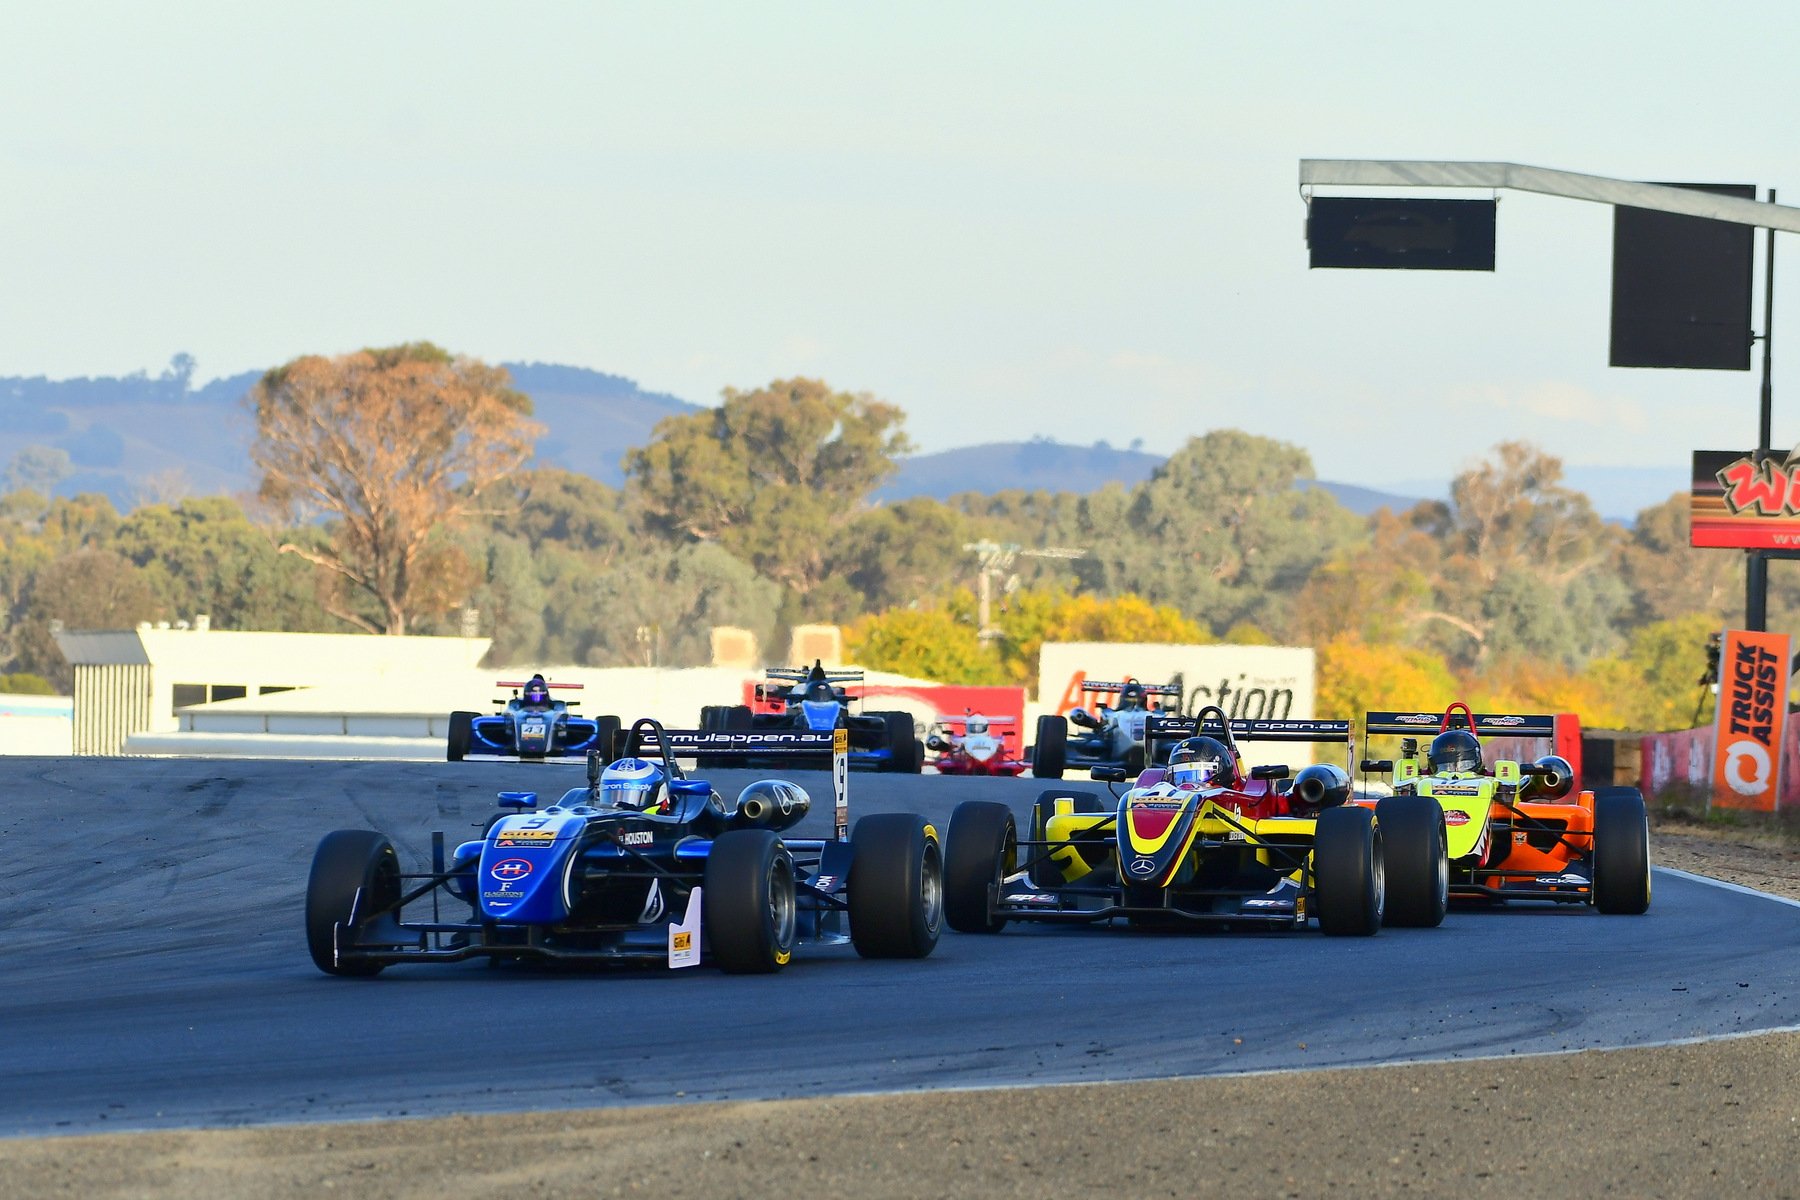 Giti Australian Formula Open: El Hogar de los "Wings and Slicks" en Australia